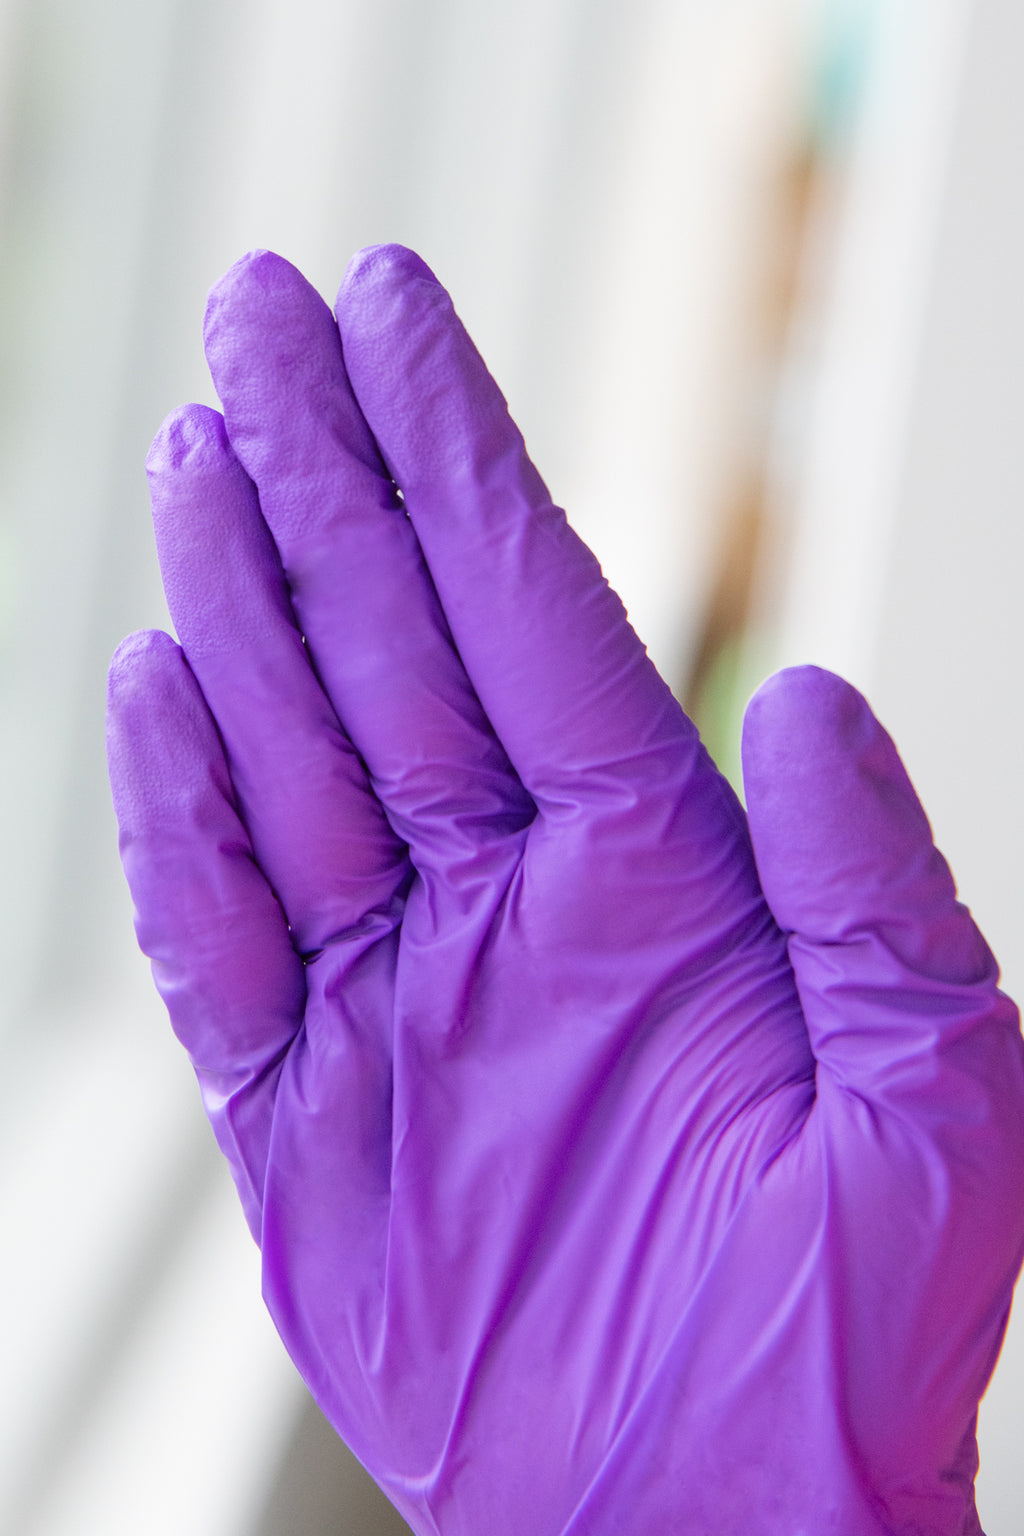 Framar Pink Paws Nitrile Gloves  Disposable Gloves, Latex Free Gloves -  100 count, Pink Gloves, Non Latex Gloves, Vitrile